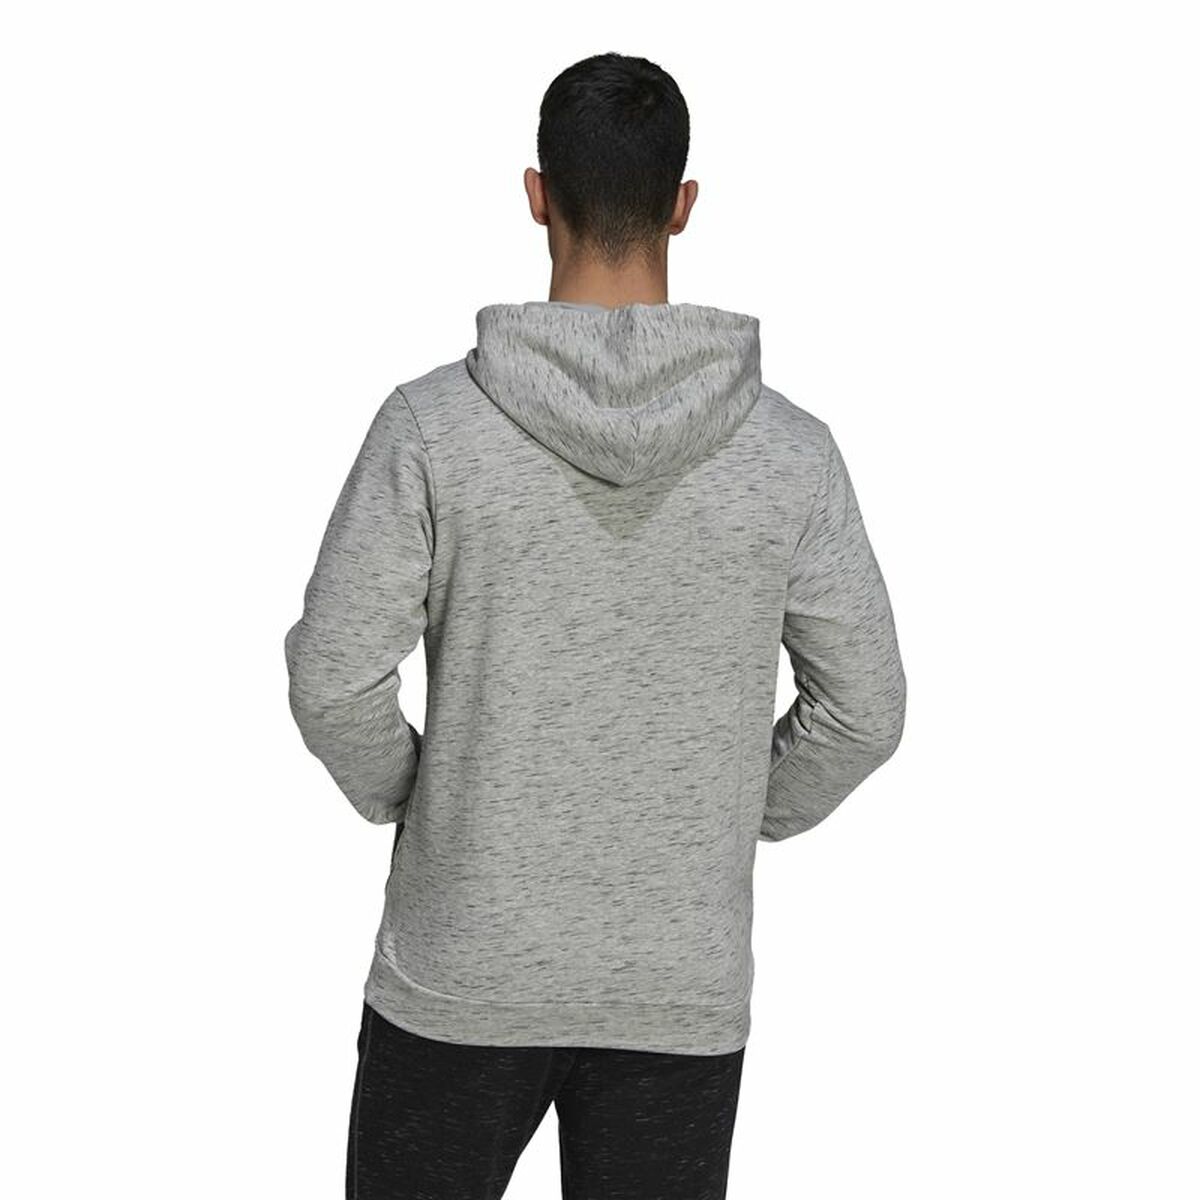 Men’s Hoodie Adidas Essentials Mélange Embroidered Light grey